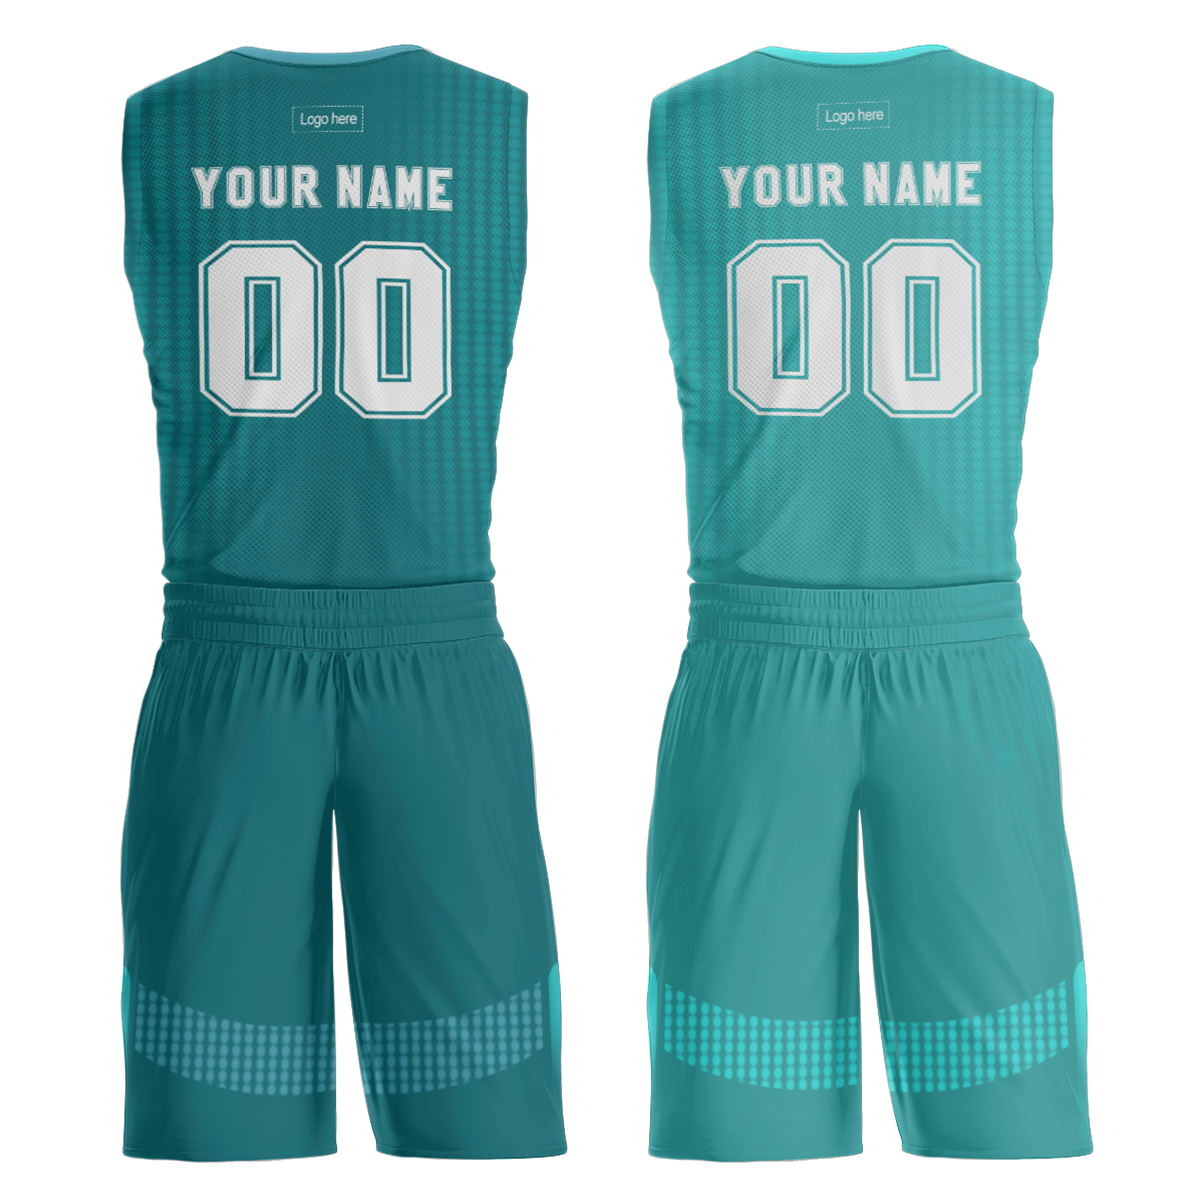 Wholesale Professional Factory Sportswear Custom Print on Demand Reversible Basketball Jersey